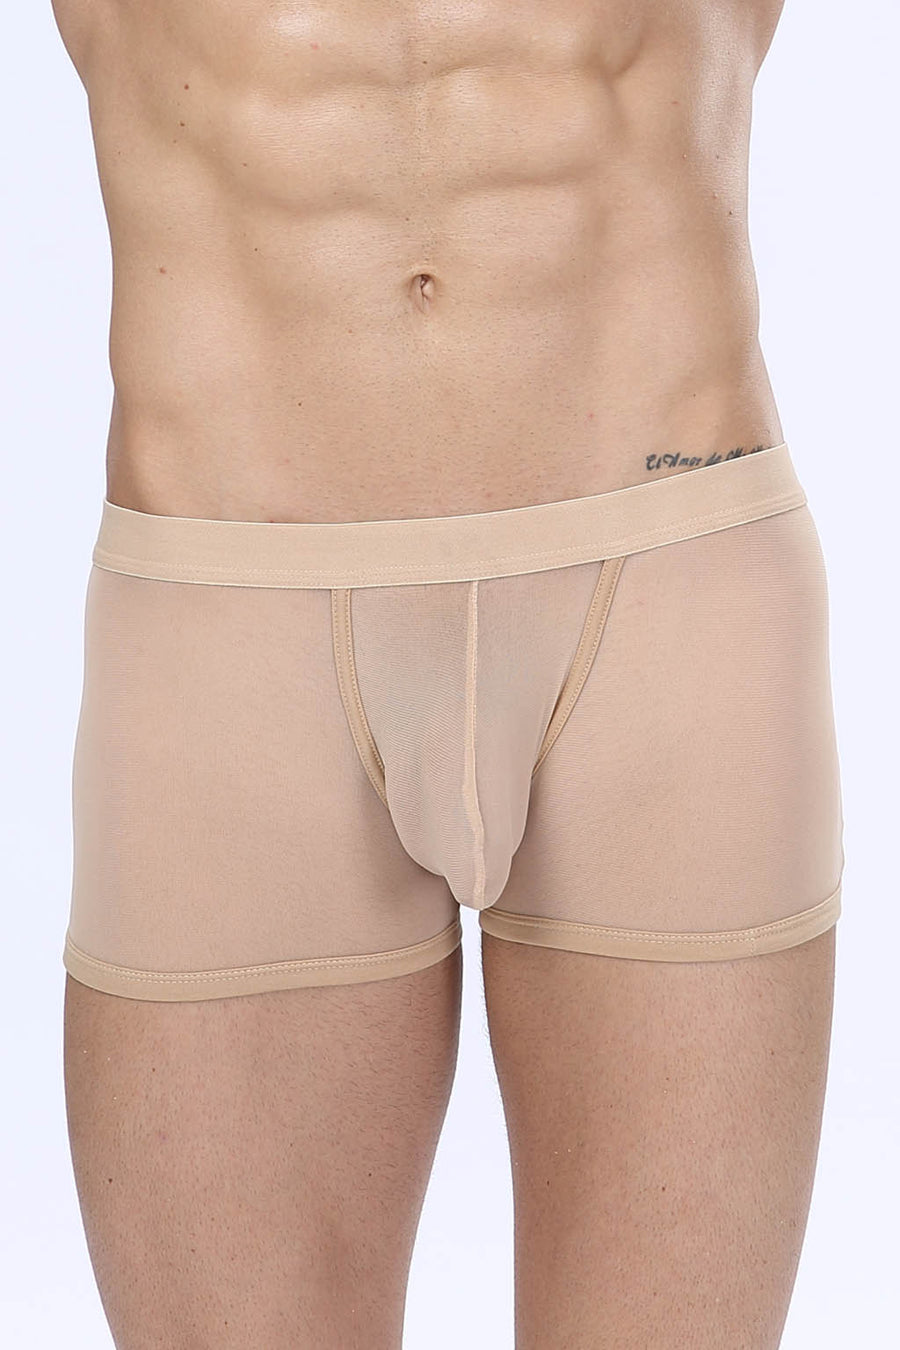 Manview Mens Sheer Net Boxer Lowrise Pouch Underwear